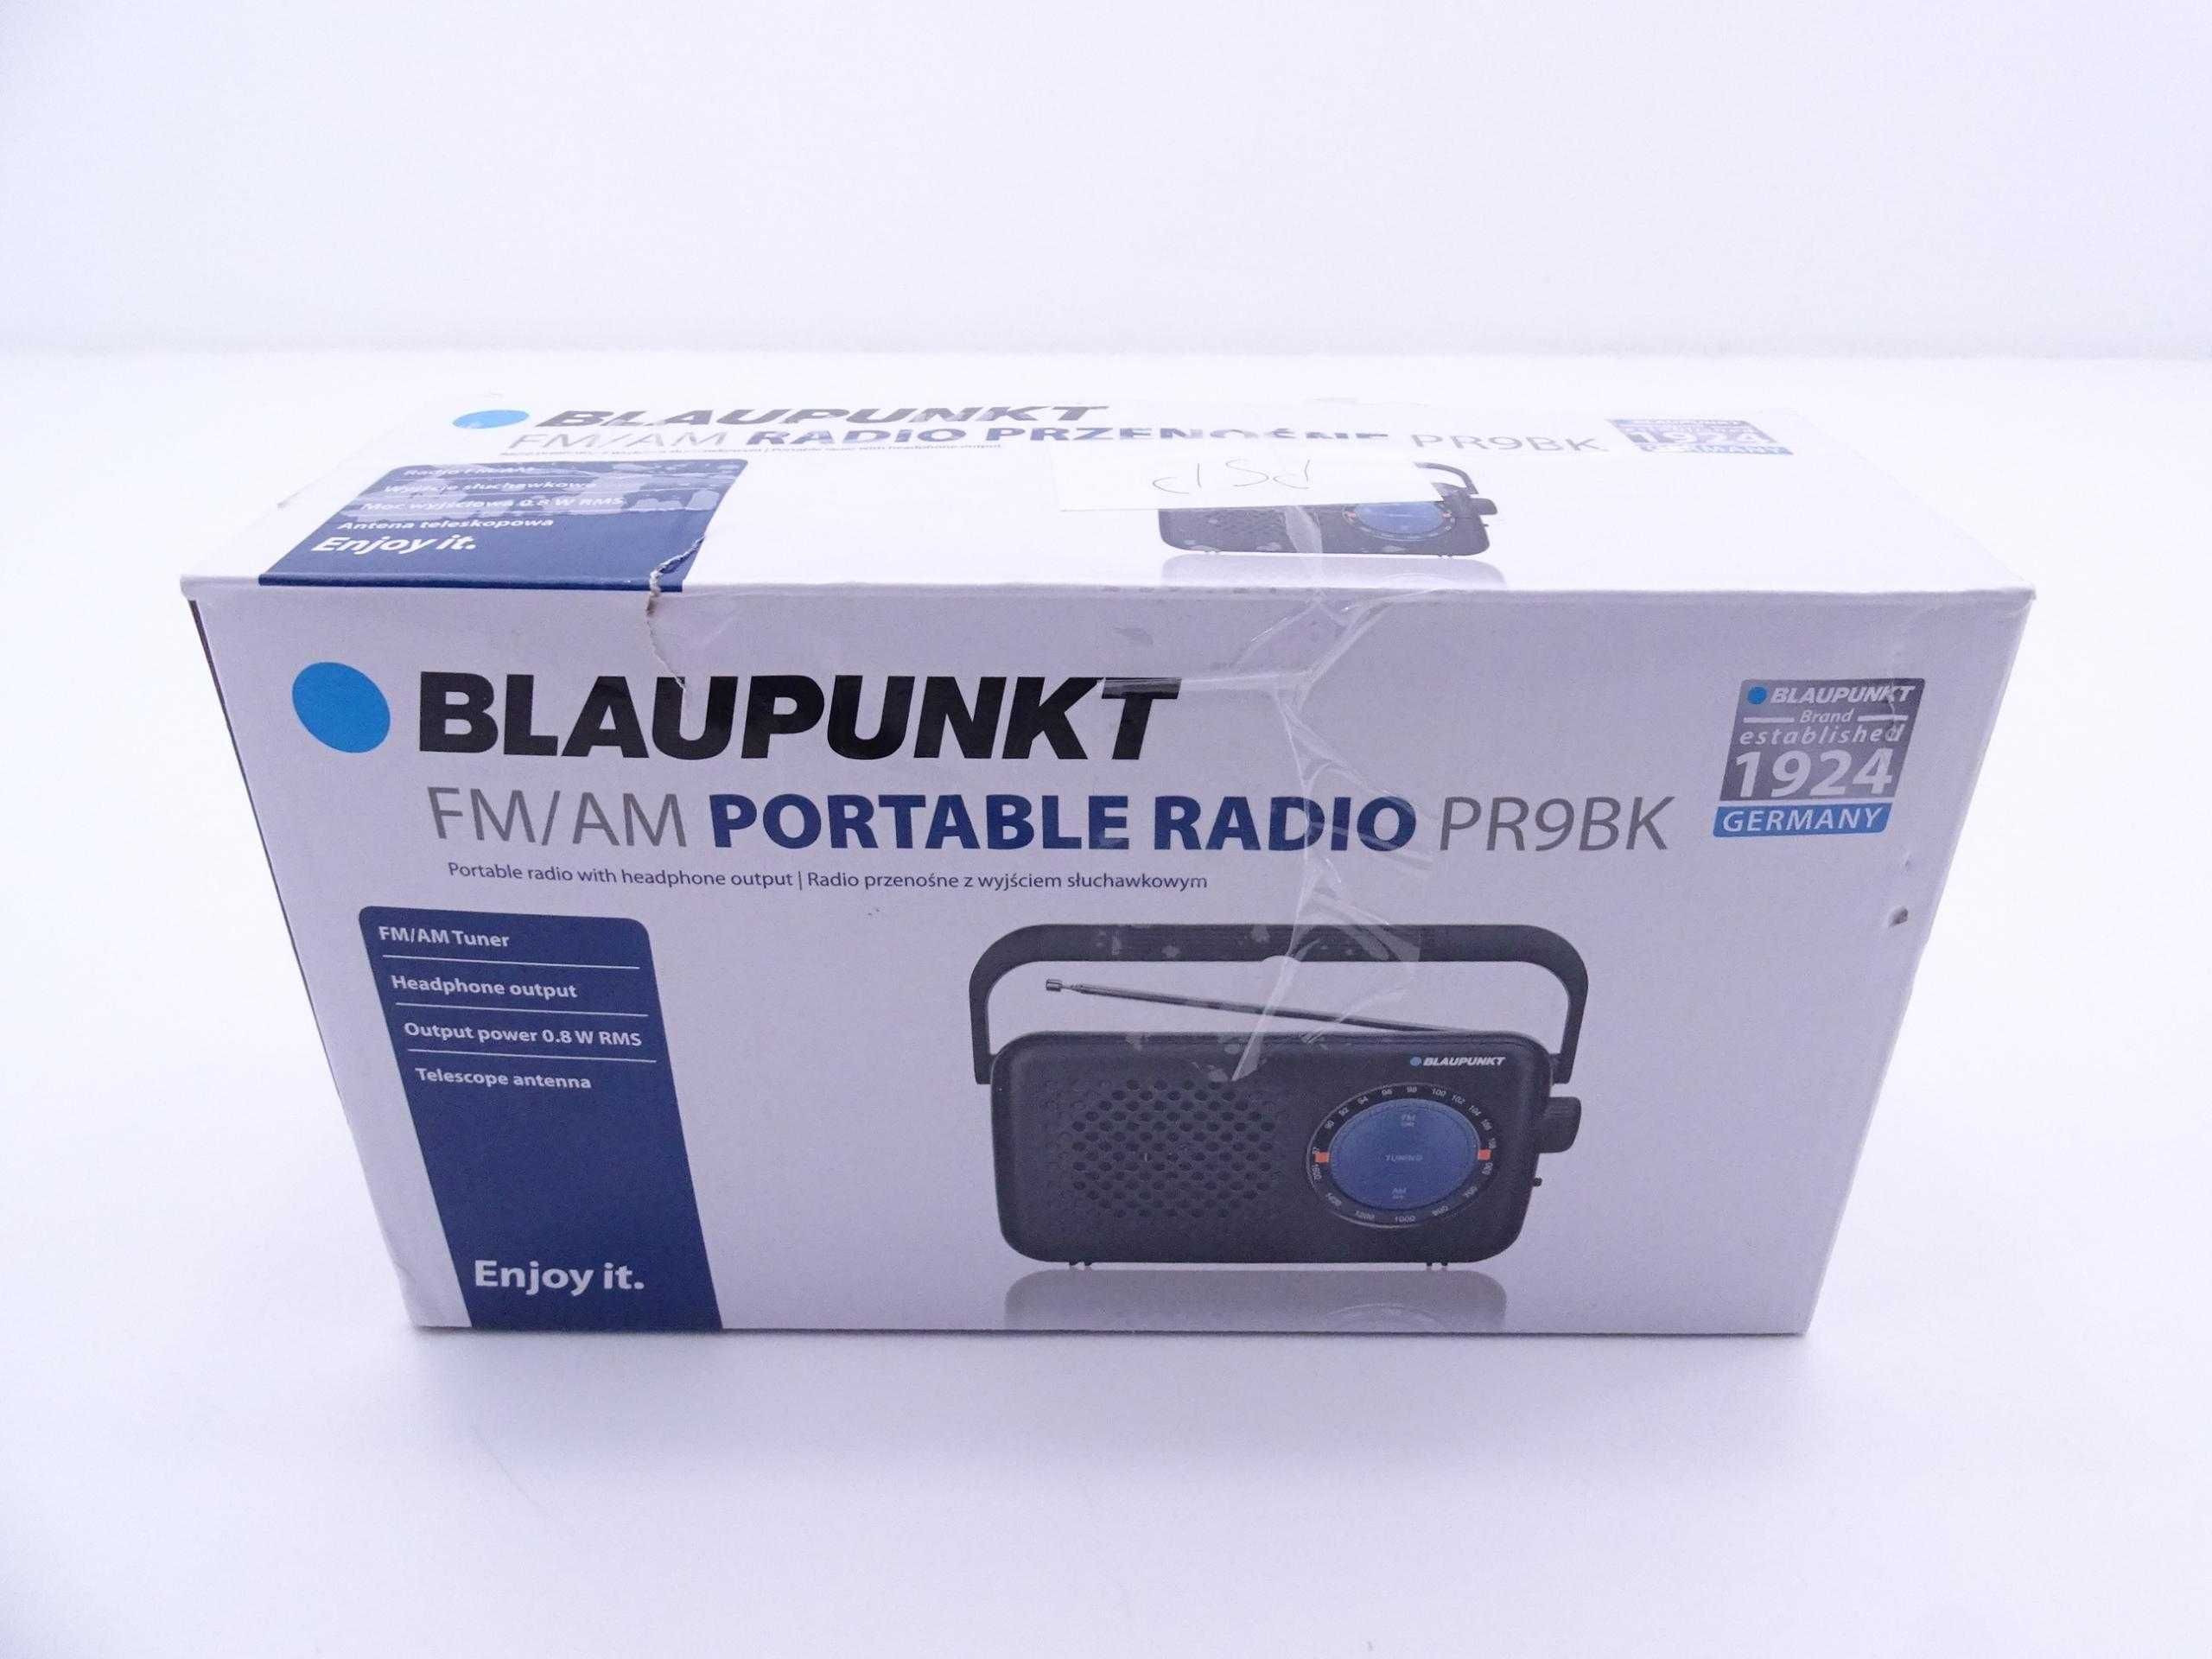 Radio FM i AM sieciowe i na baterie - Blaupunkt